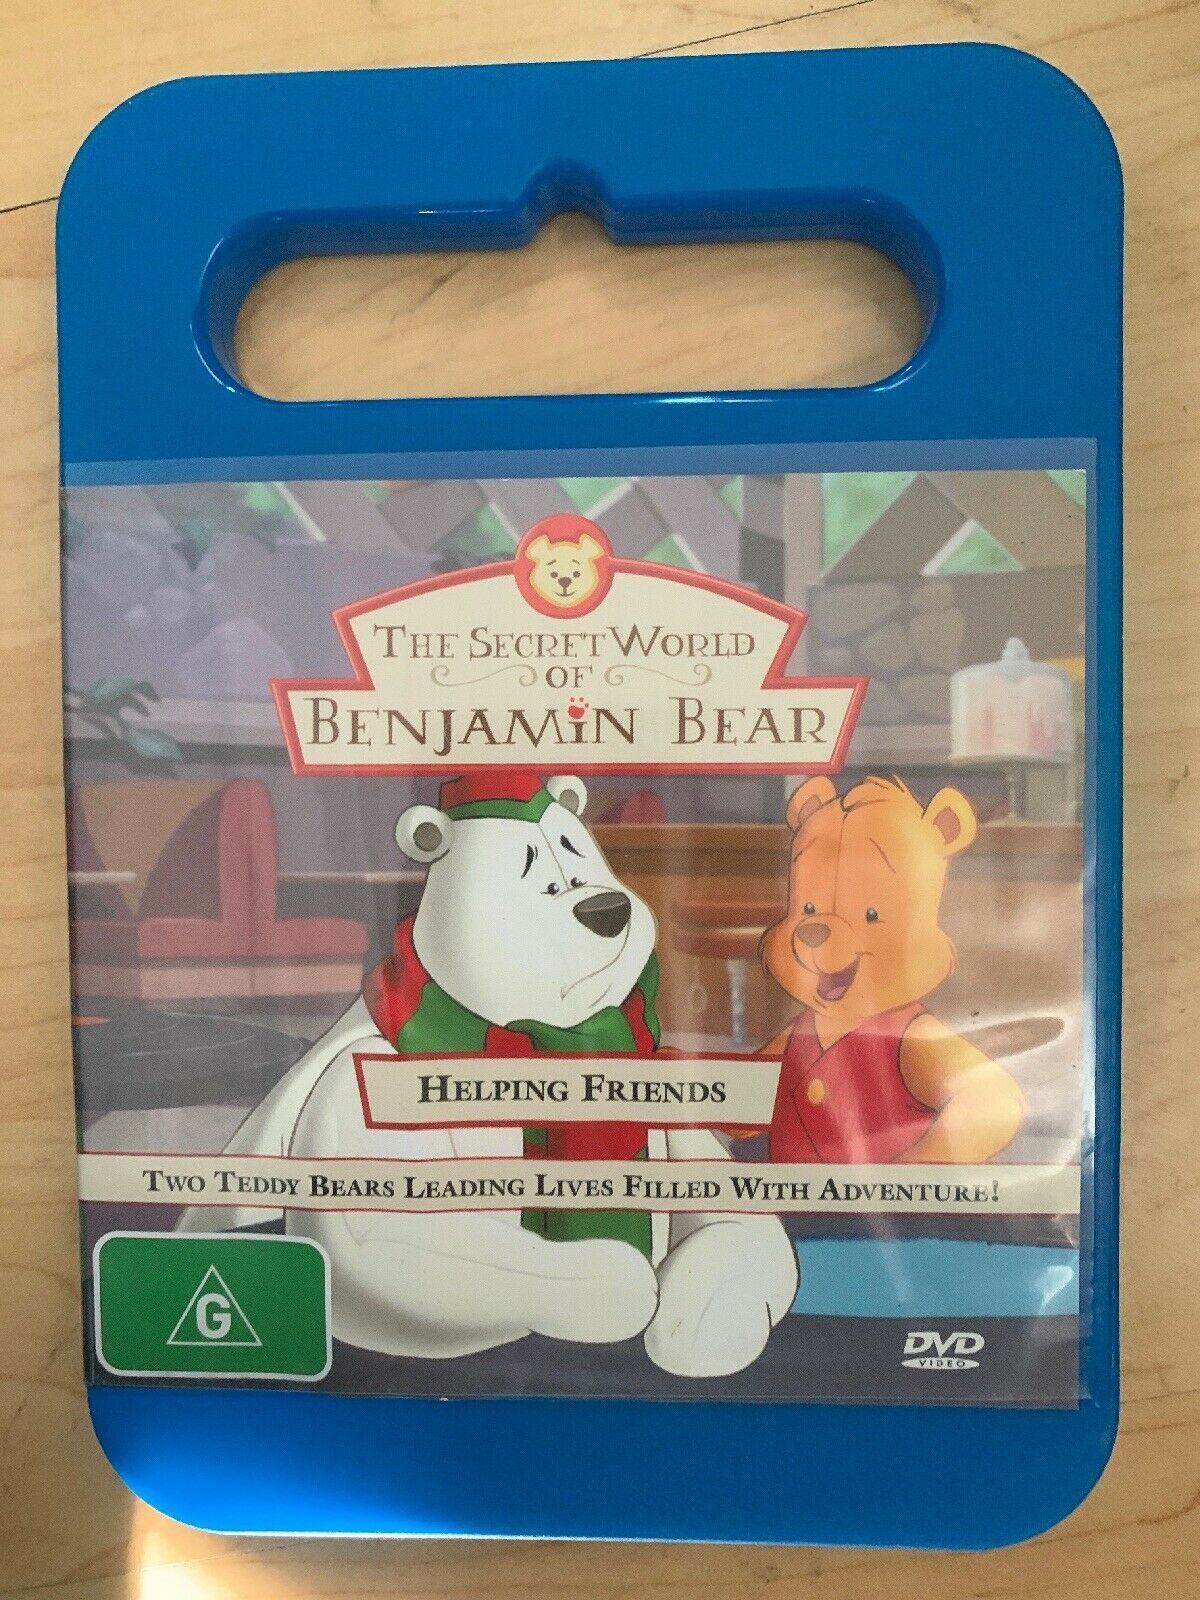 The Secret World Of Benjamin Bear - Helping Friends MOVIE PAL DVD Region 4